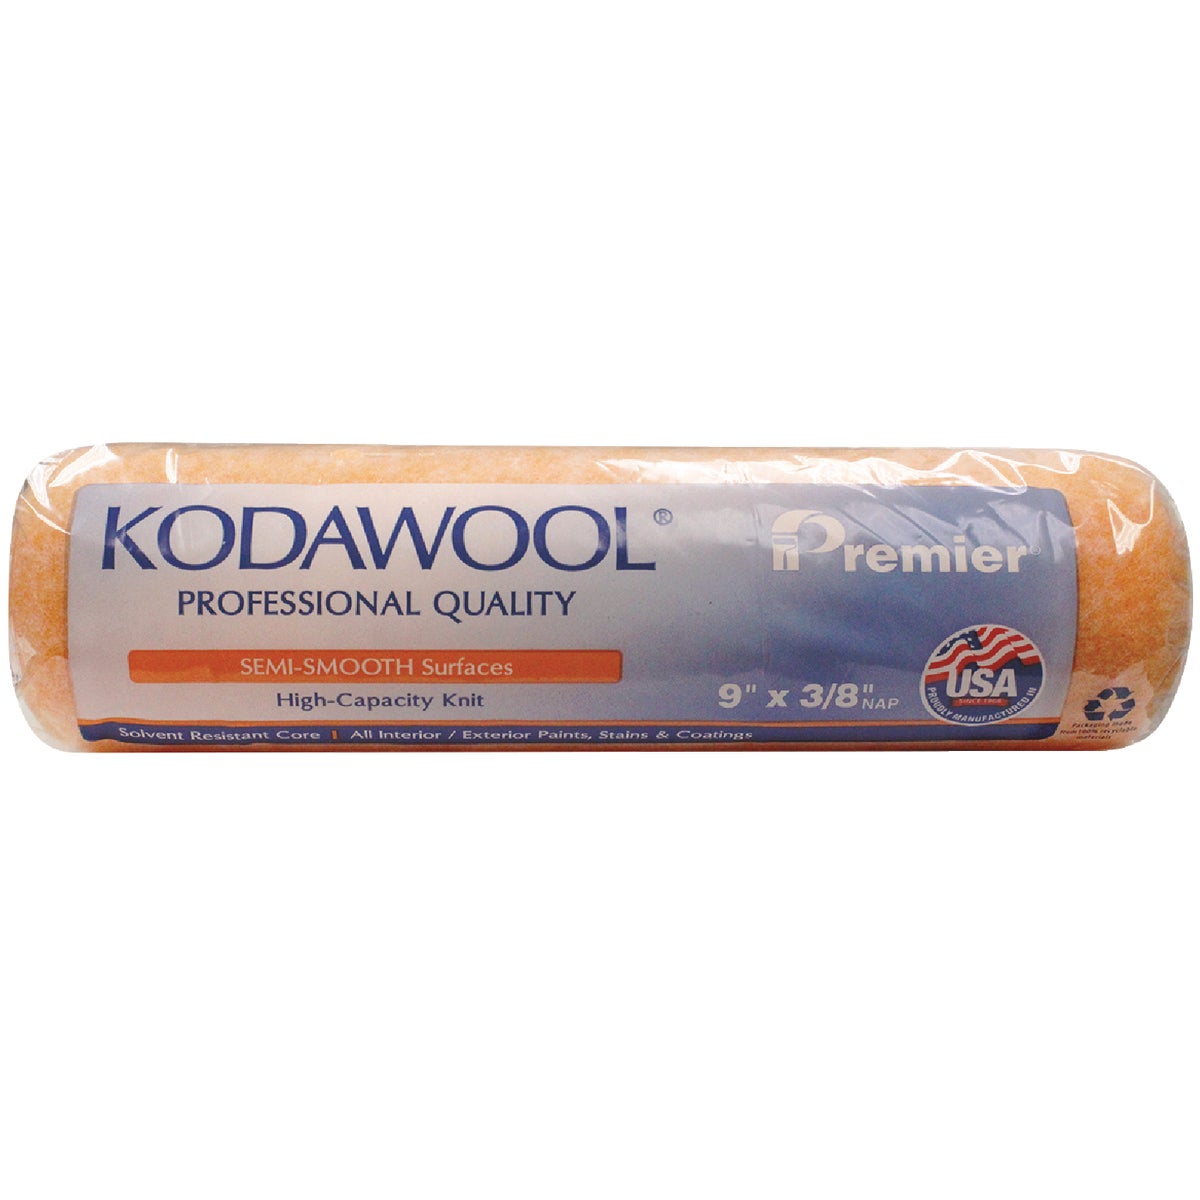 Premier Kodawool 9 In. X 3/8 In. Roller Cover